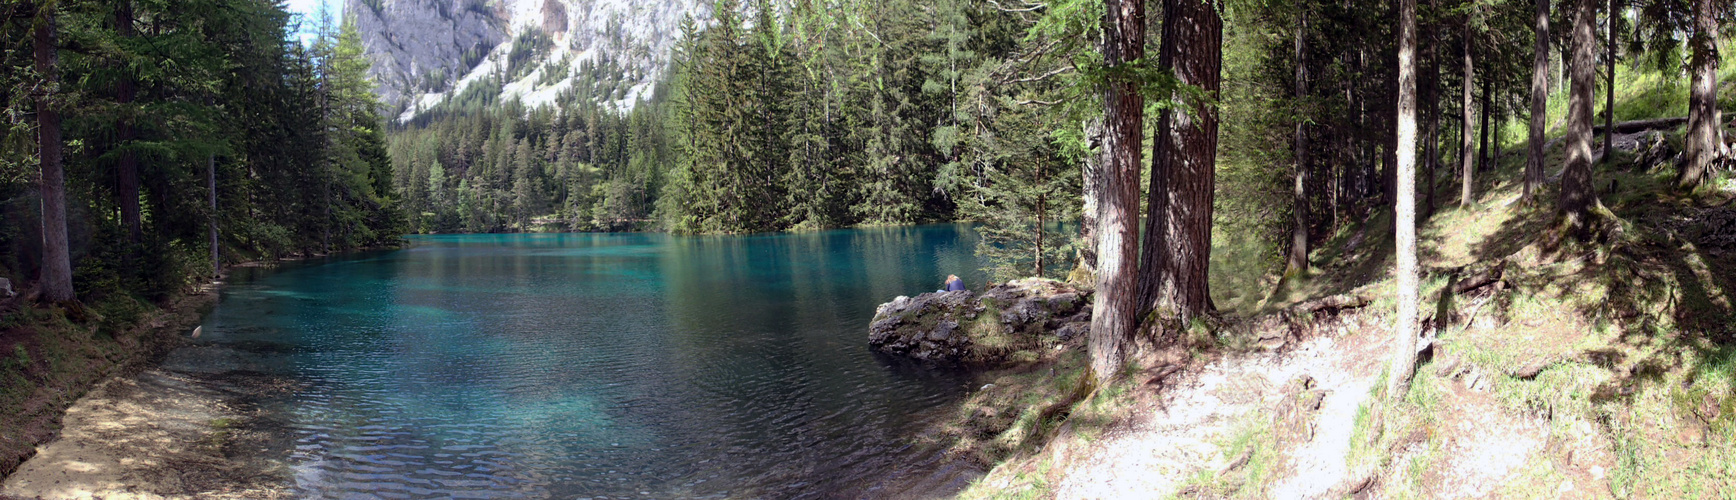 Panorama Bild grüner See